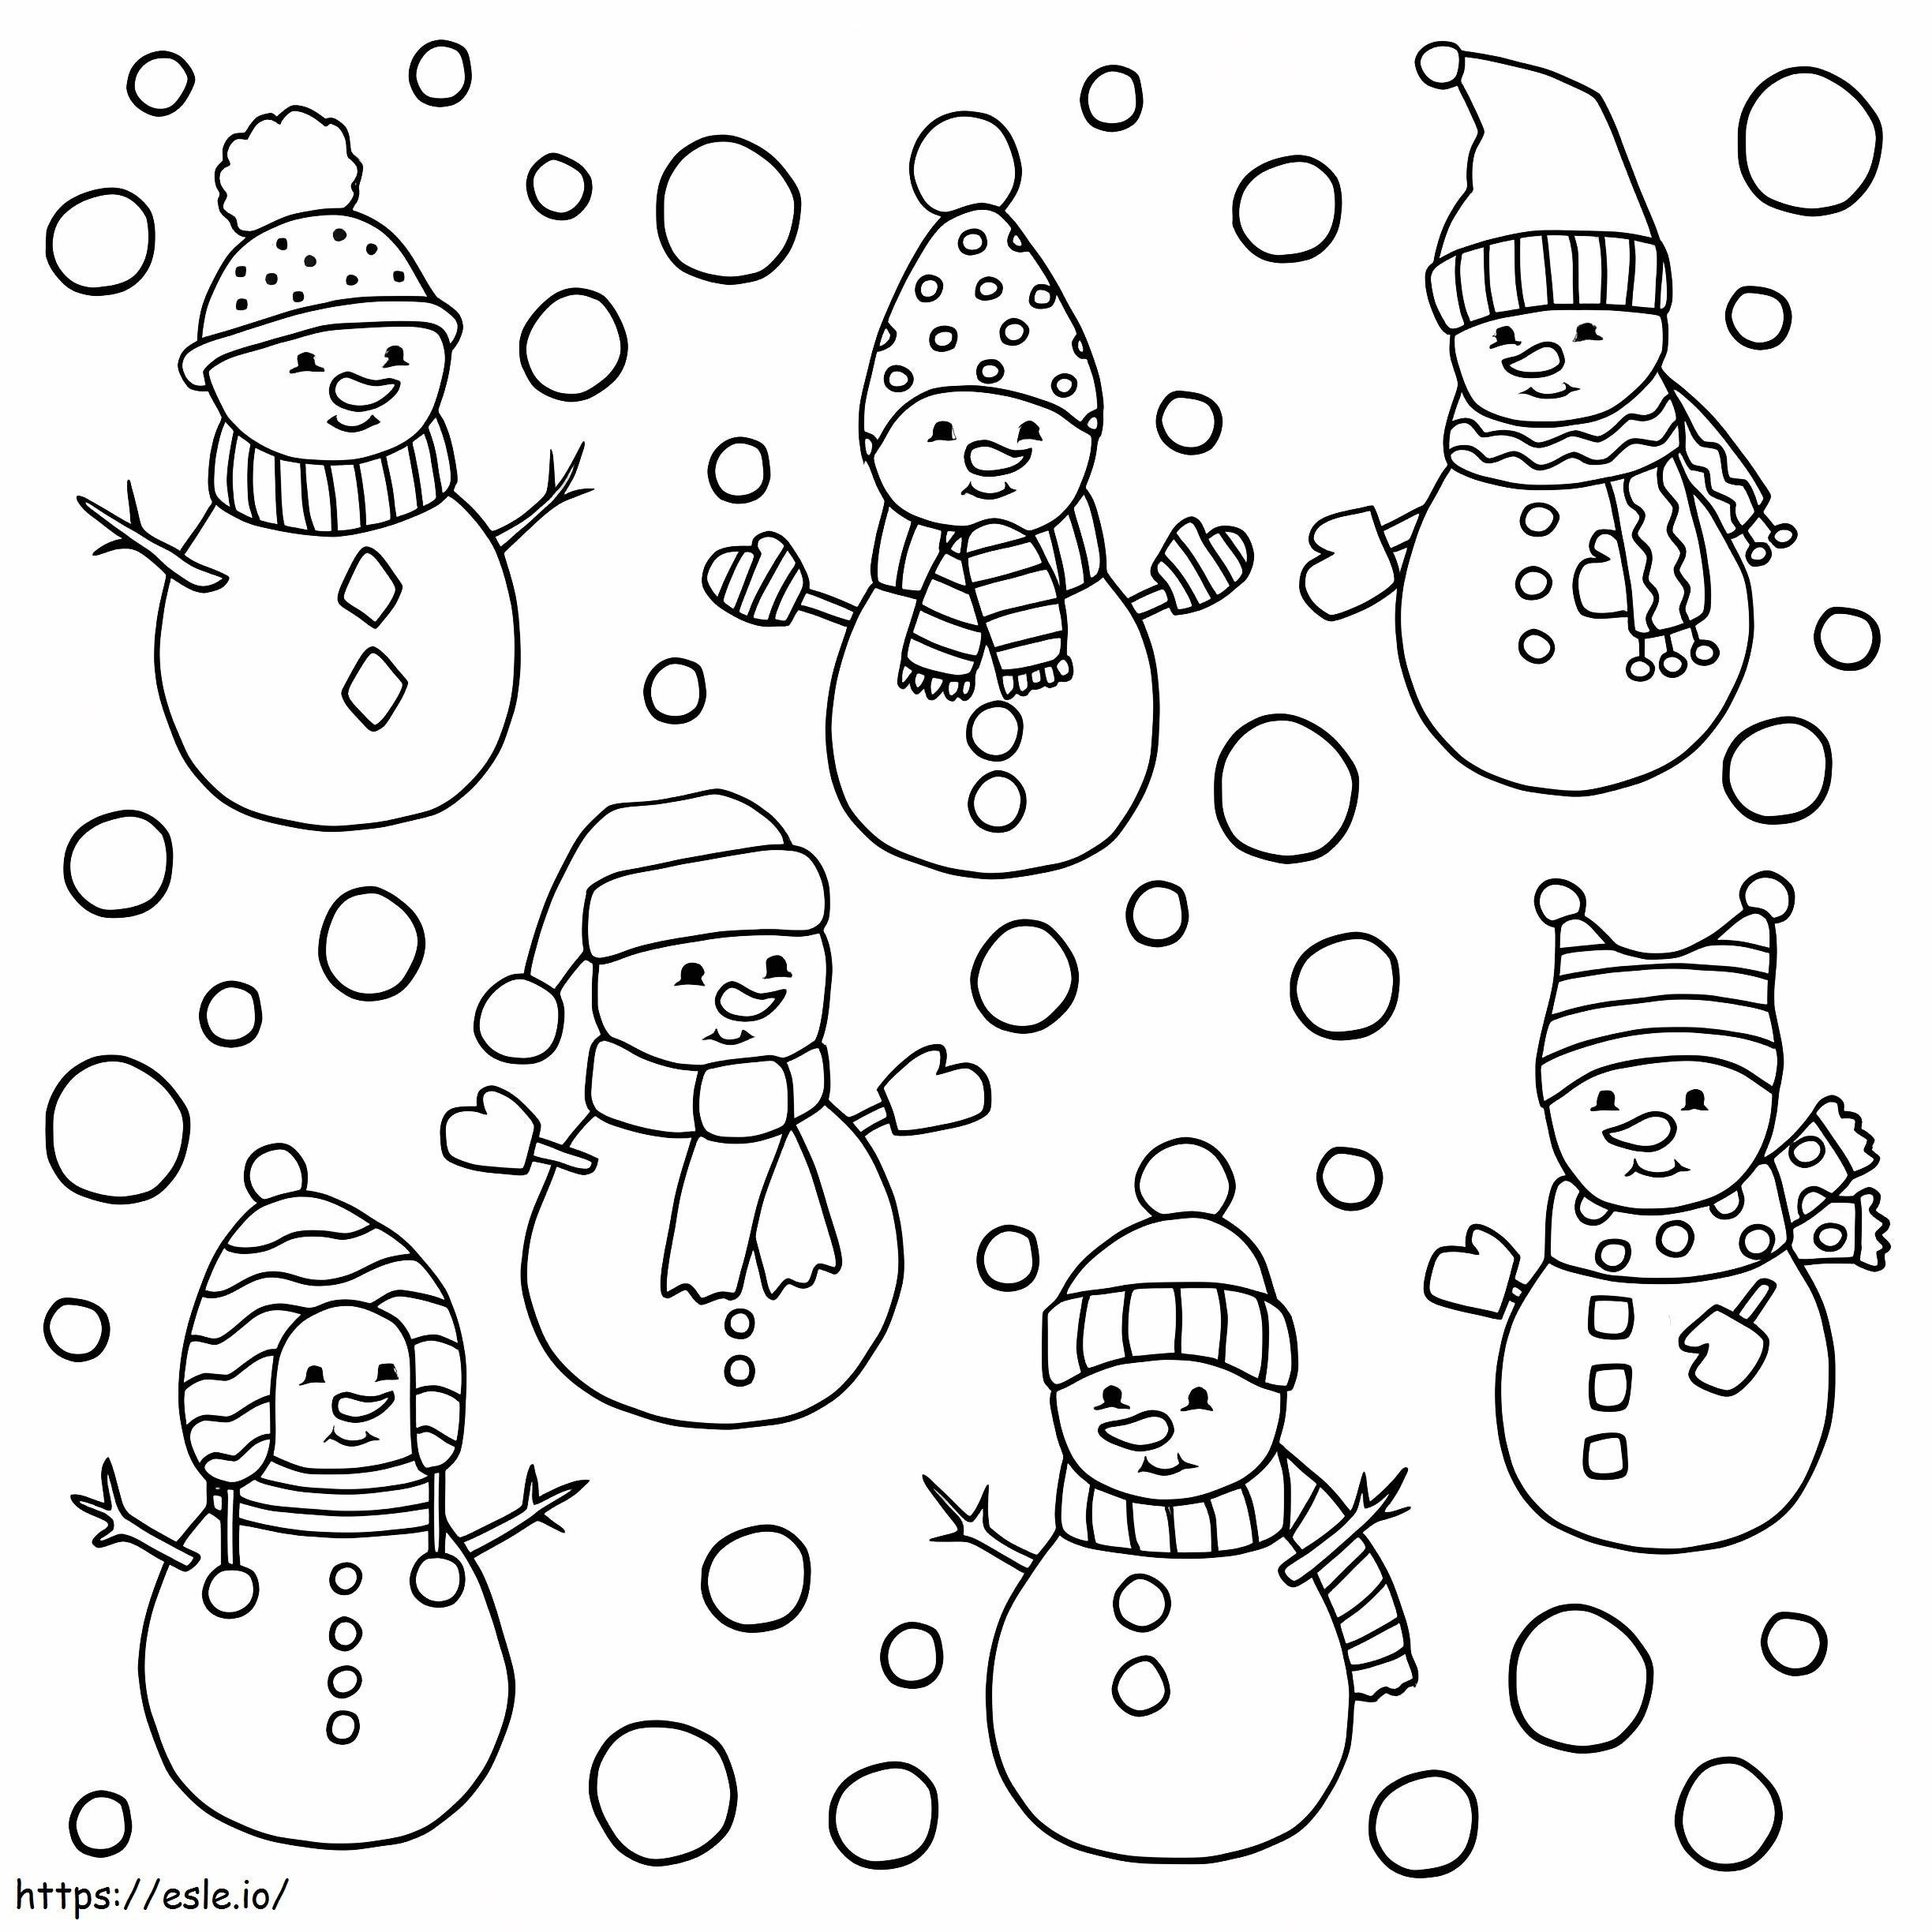 Seven Snowman coloring page